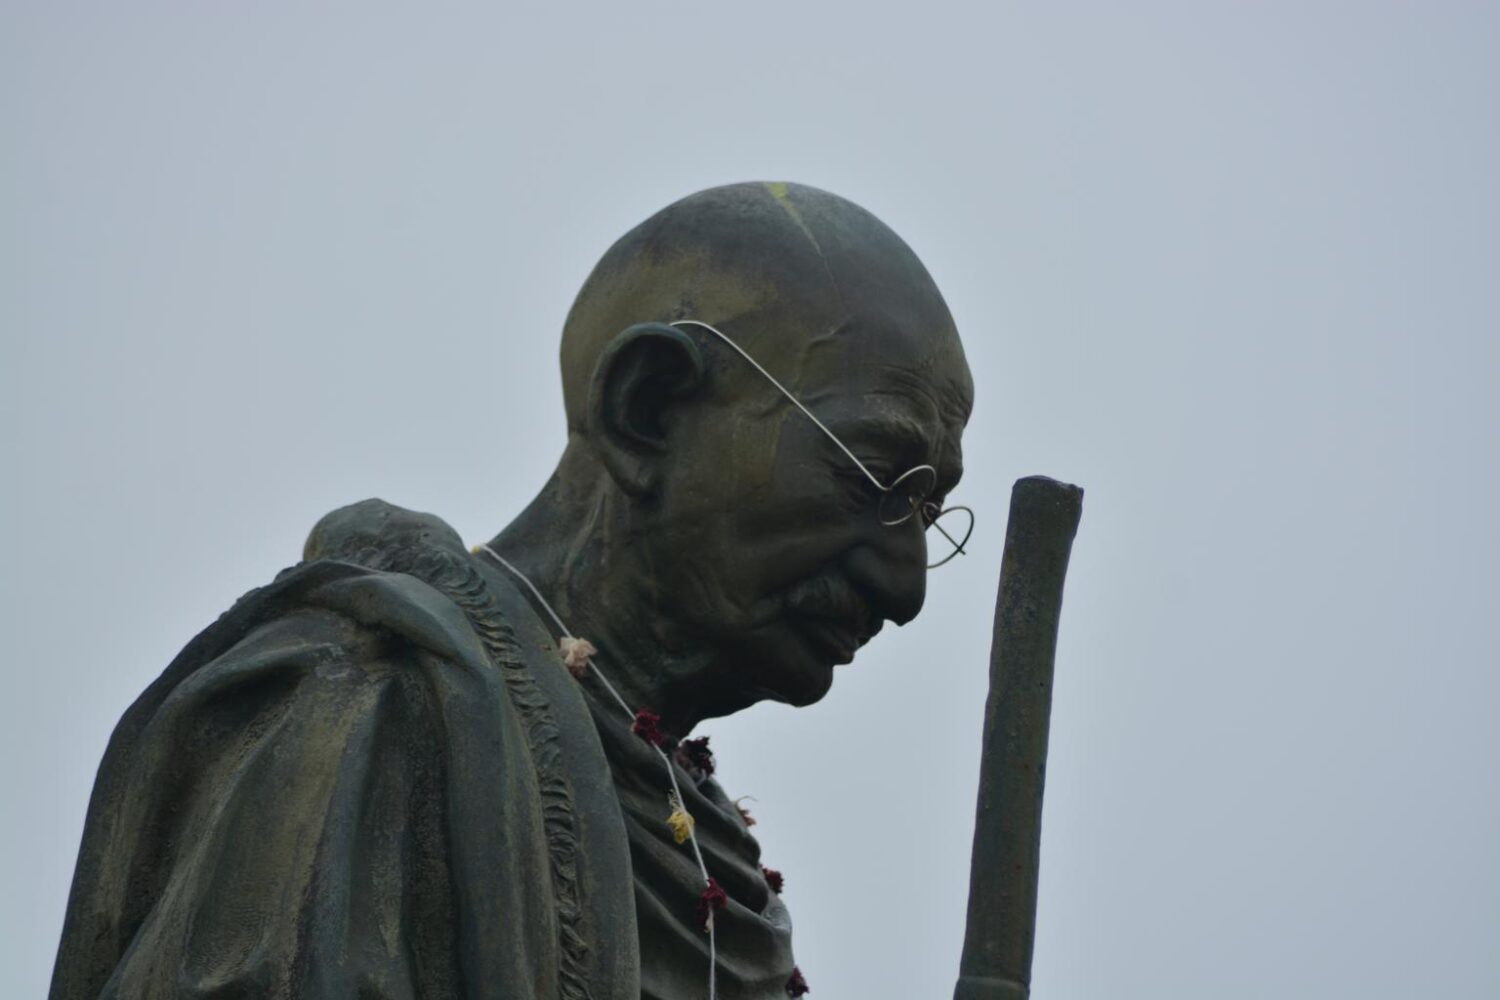 ghandi statue indian gandhi leader landmark man memorial sculpture mahatma famous park historical monument site